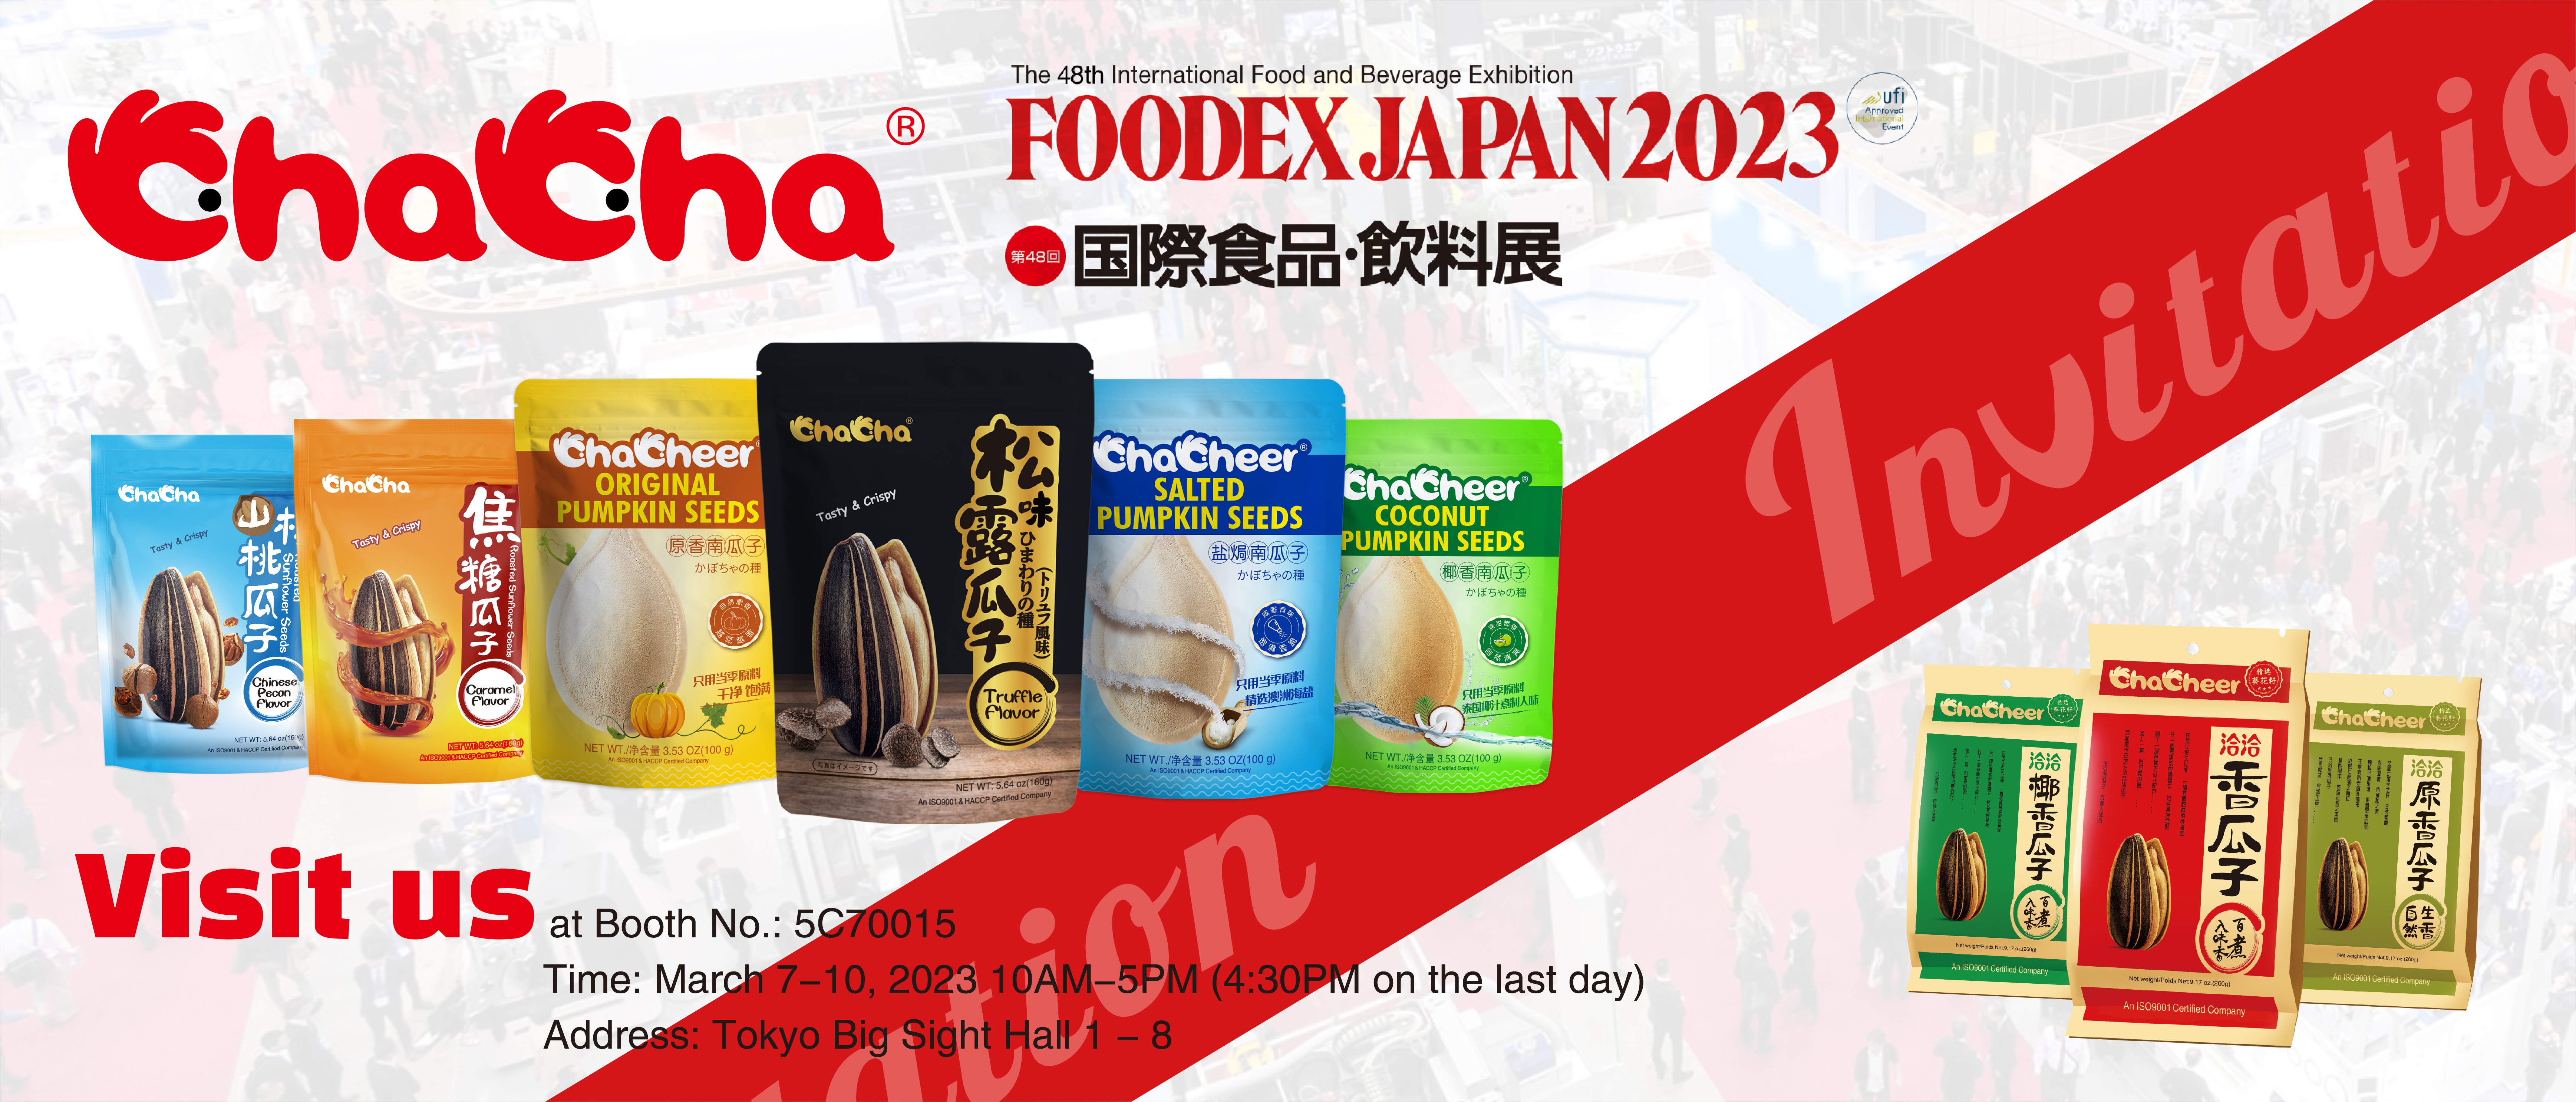 Looking forward to meeting you at the FOODEX JAPAN 2023